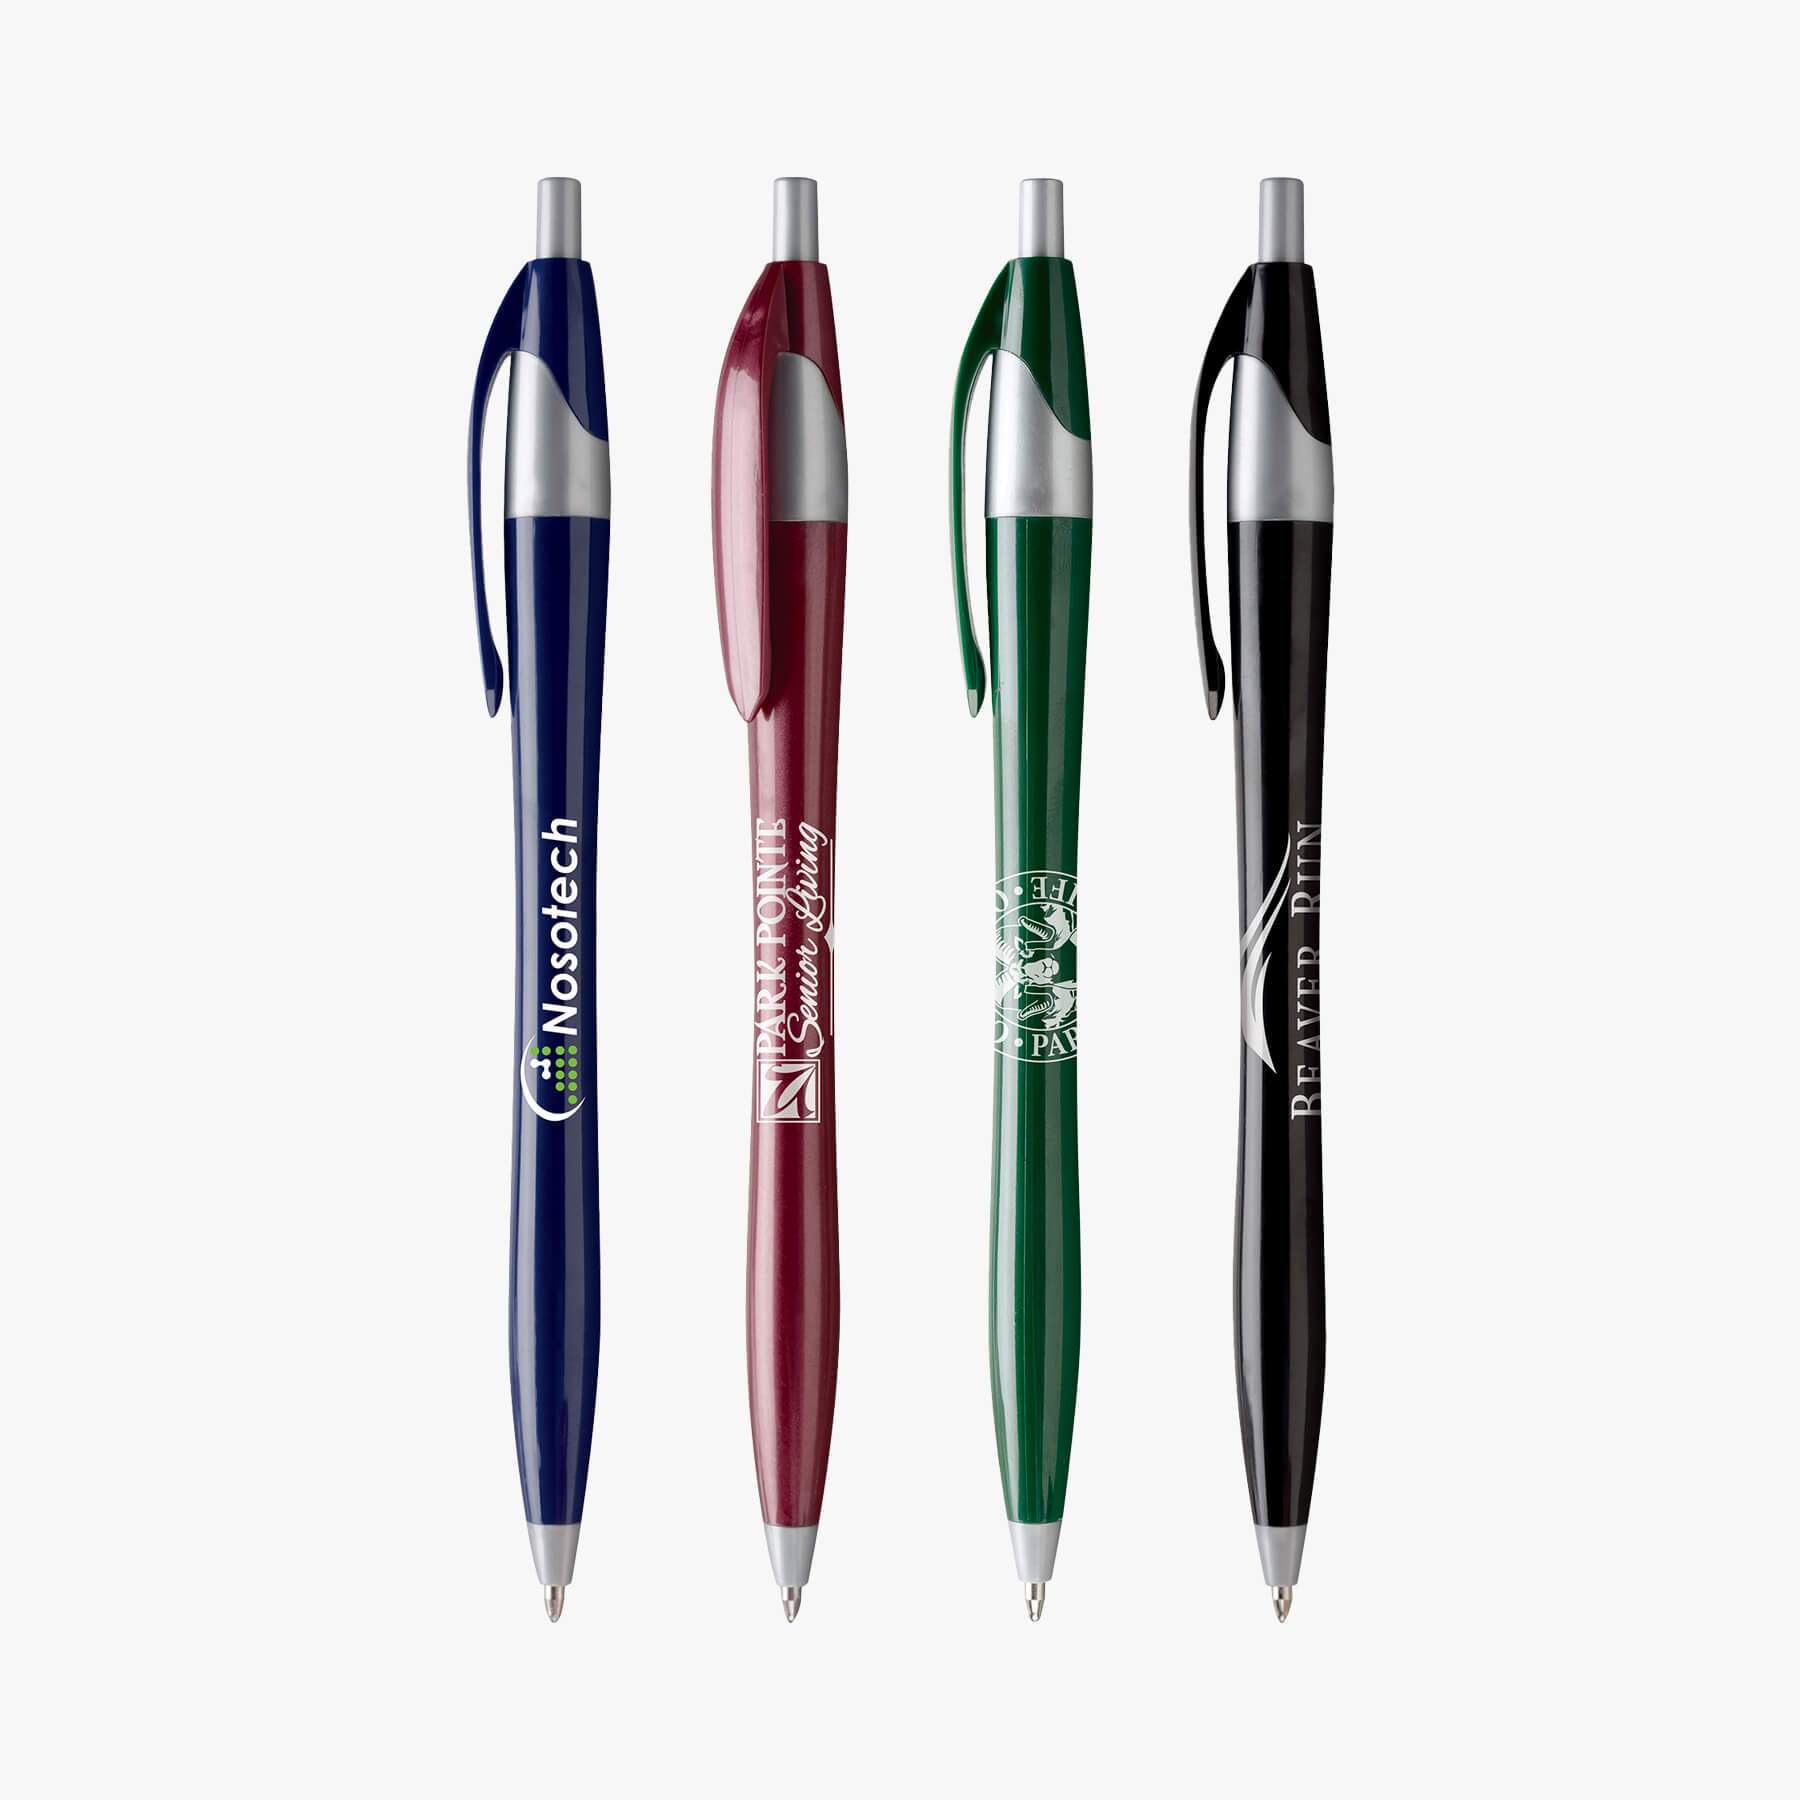 The Essentials Javalina Corporate Pen